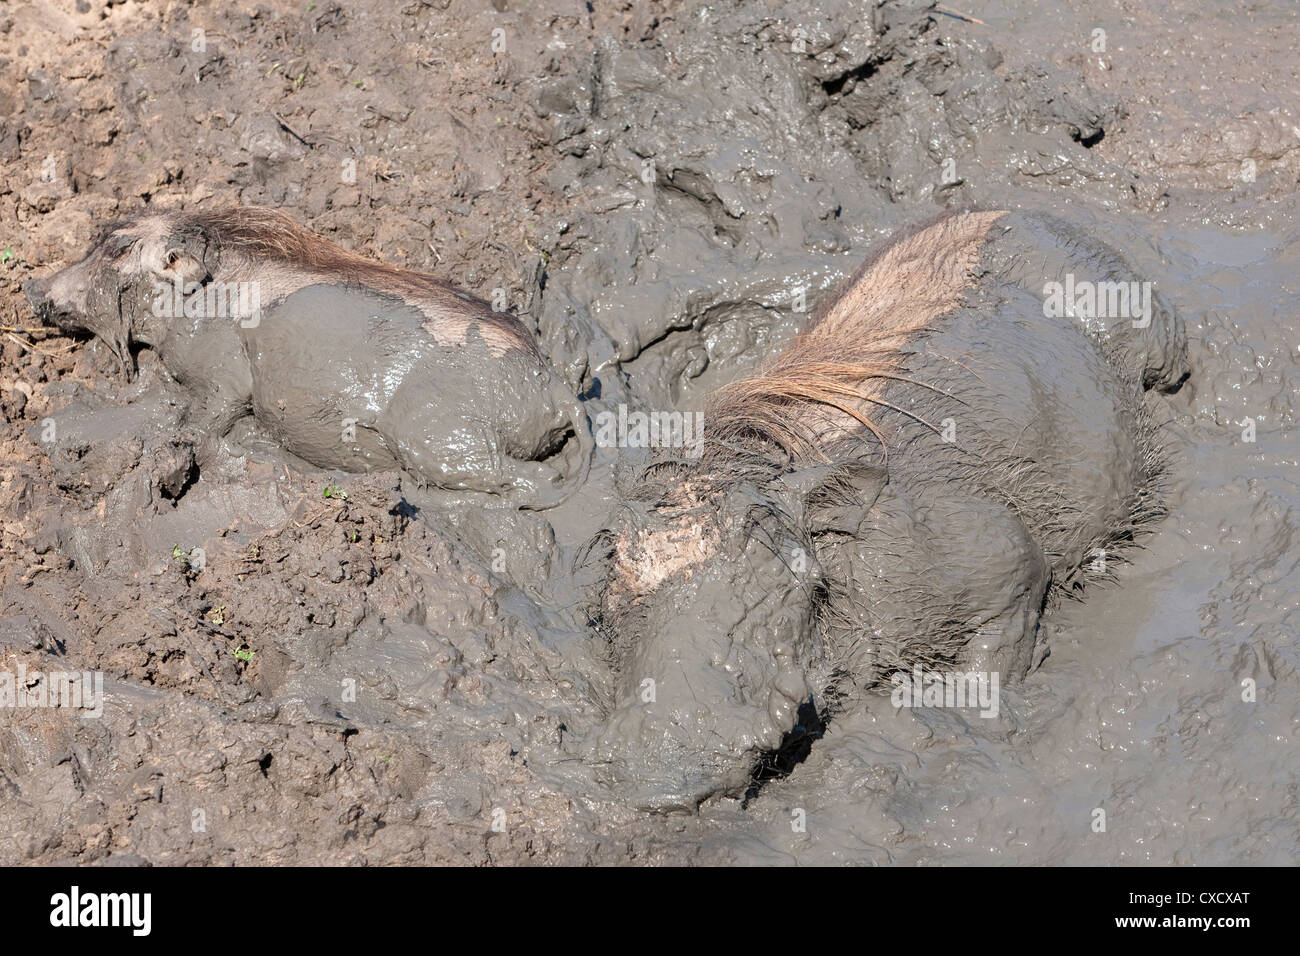 Warzenschwein (Phacochoerus Aethiopicus) schwelgen, Mkhuze Wildreservat, Südafrika, Afrika Stockfoto